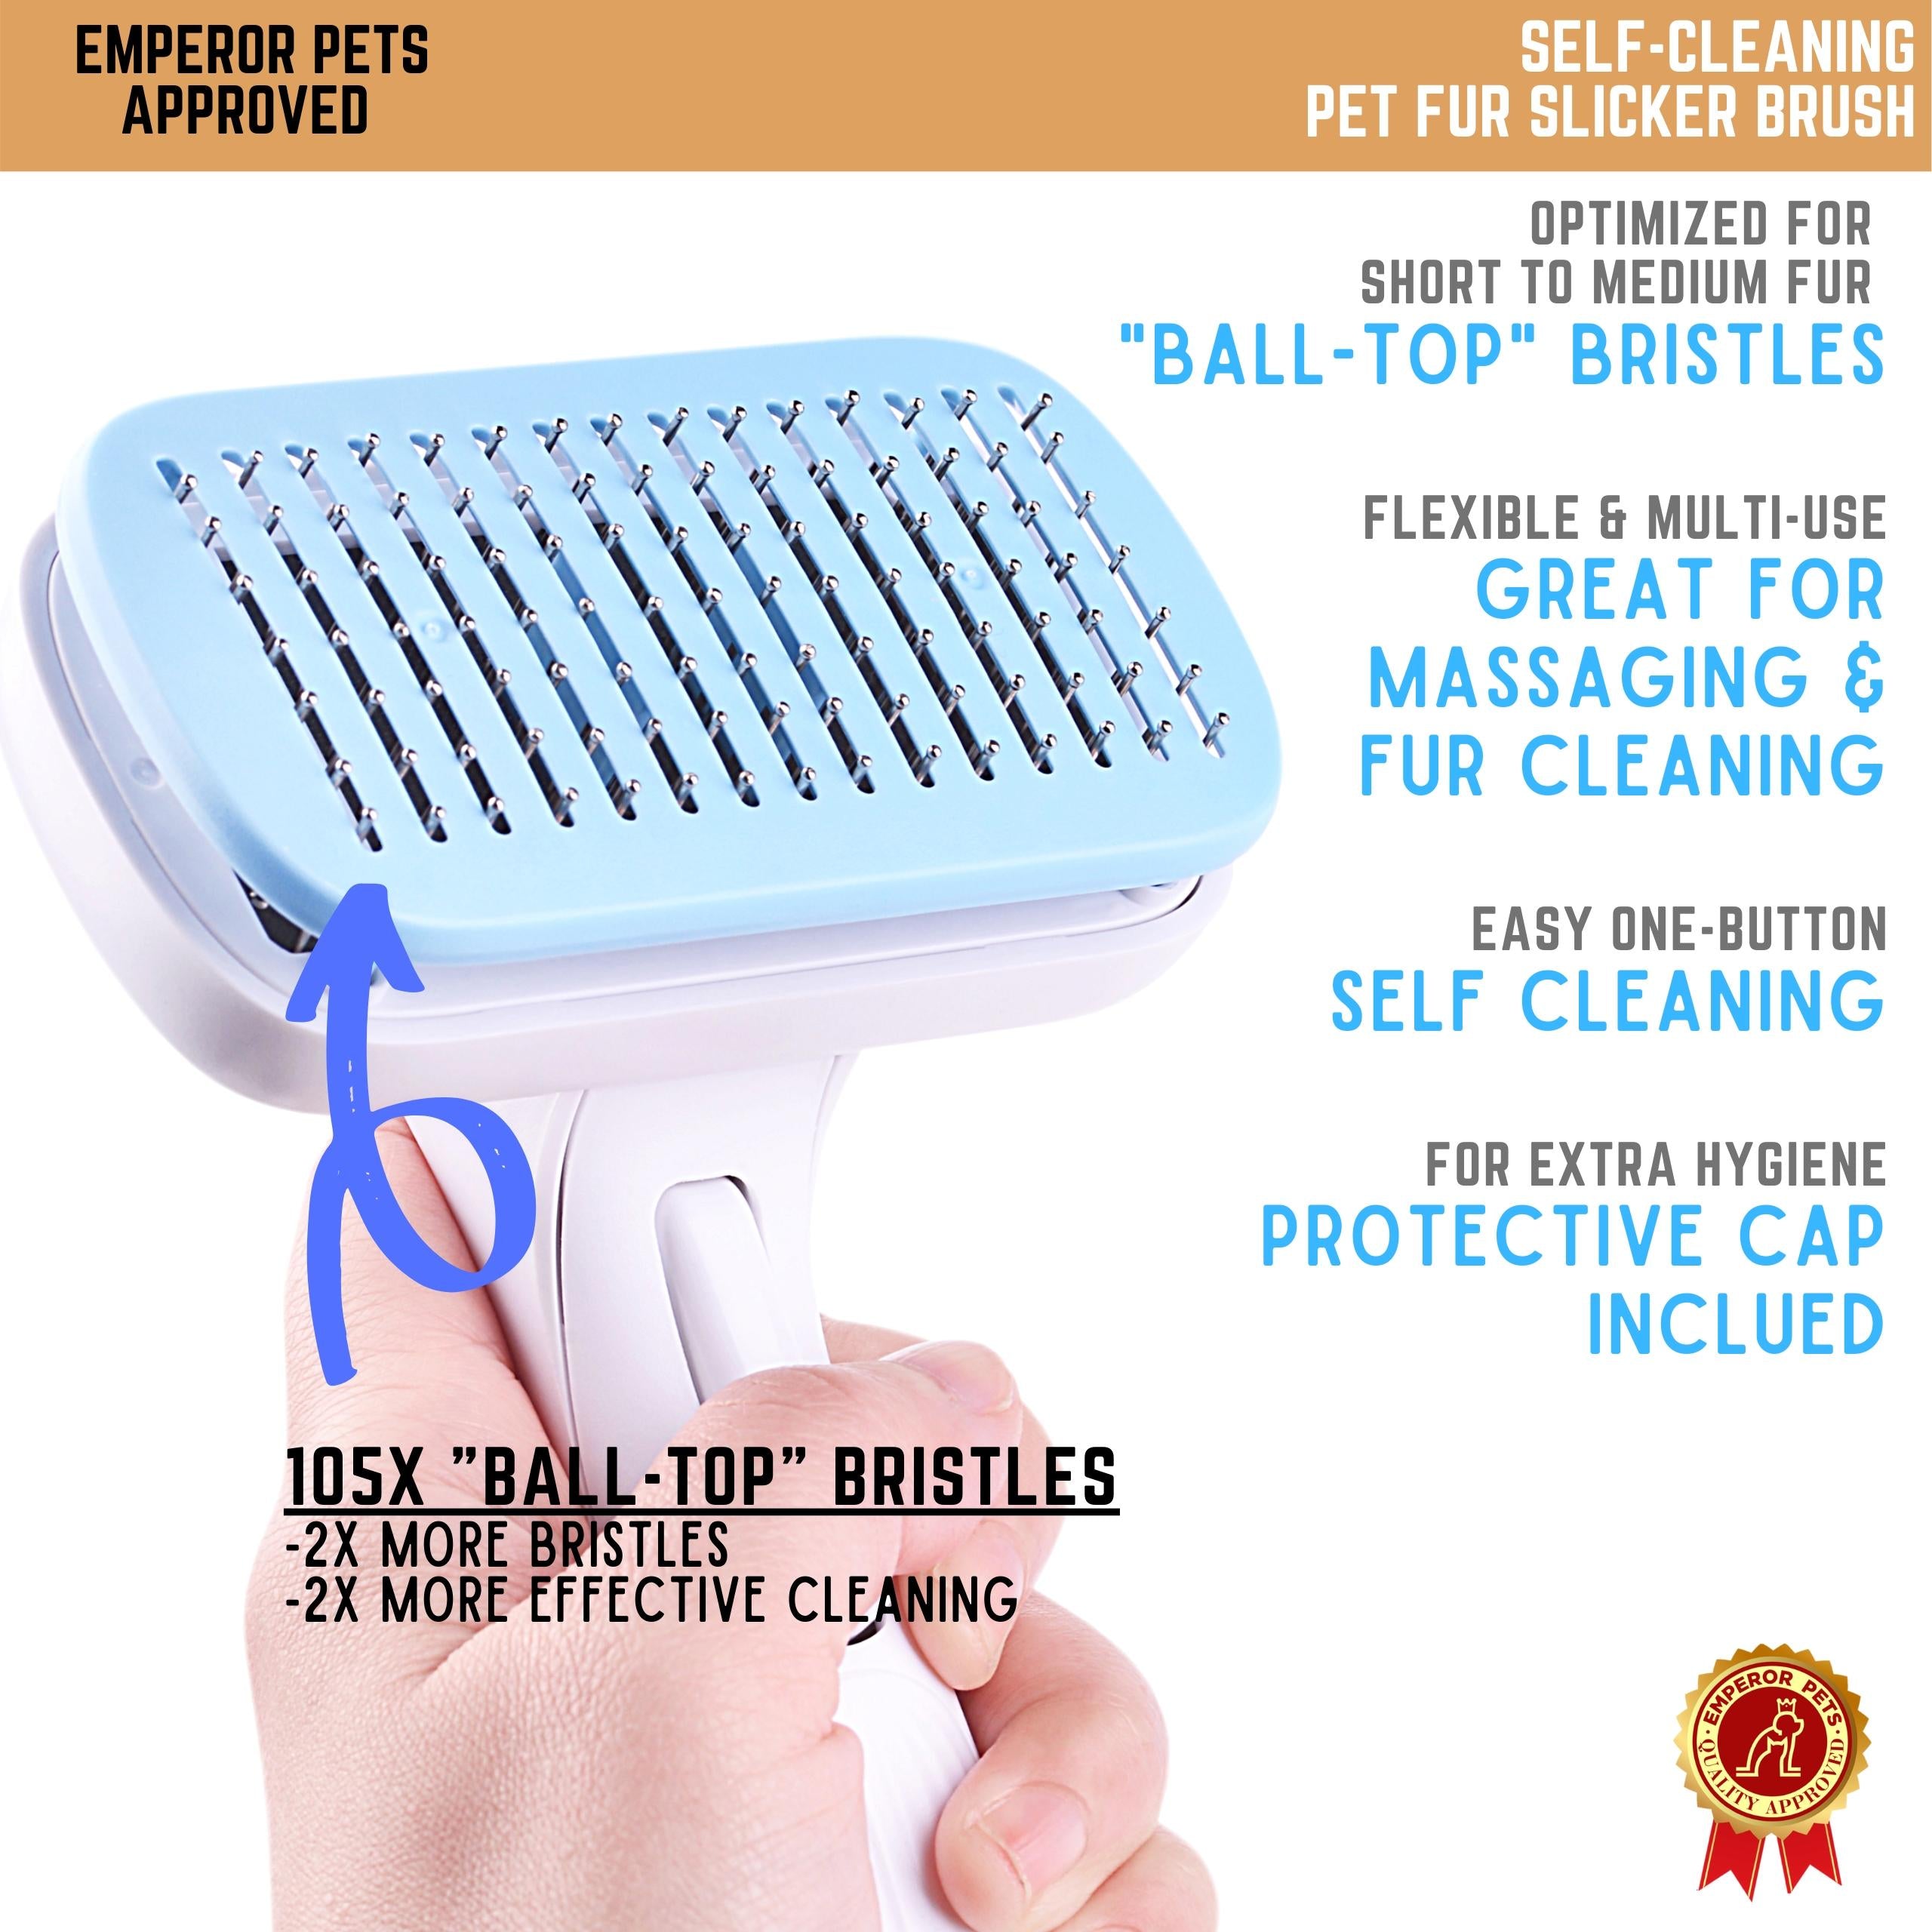 Emperor Pets Self Cleaning Pet Fur Slicker Brush for Short Fur Pets, Dog Brush, Cat Brush, Blue Color - Image 2 Highlight